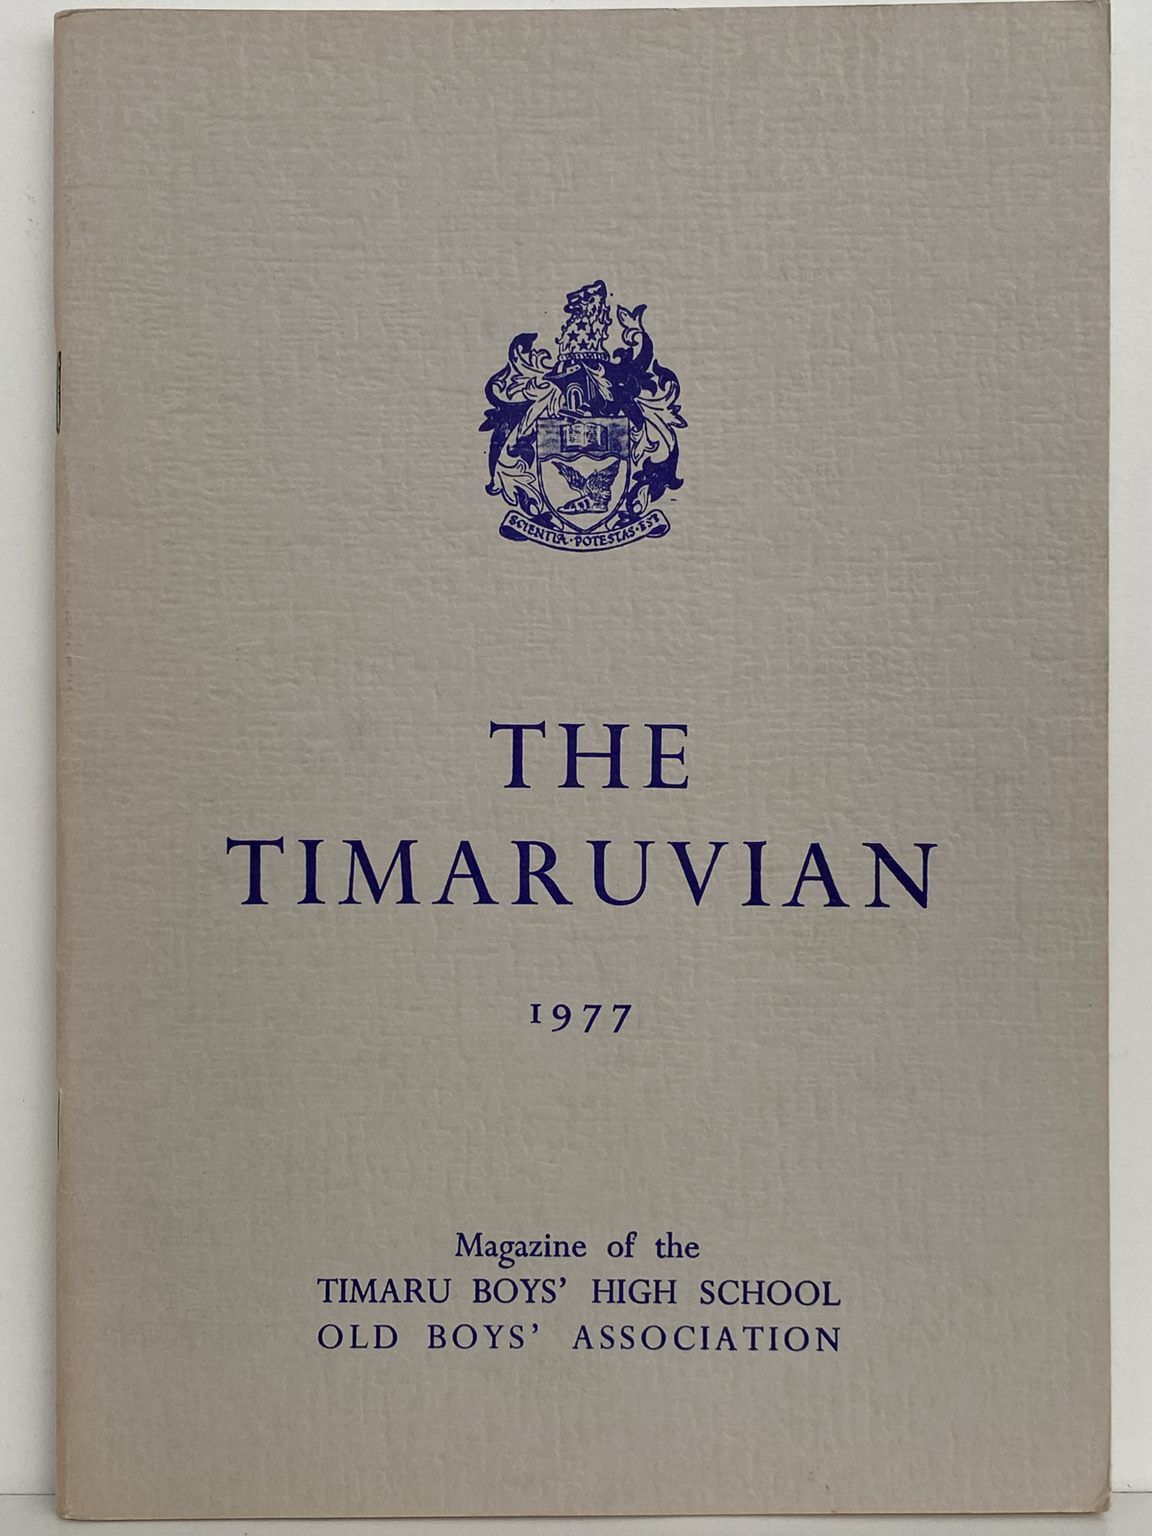 THE TIMARUVIAN: Magazine of the Timaru Boys' High School Old Boys' Association 1977